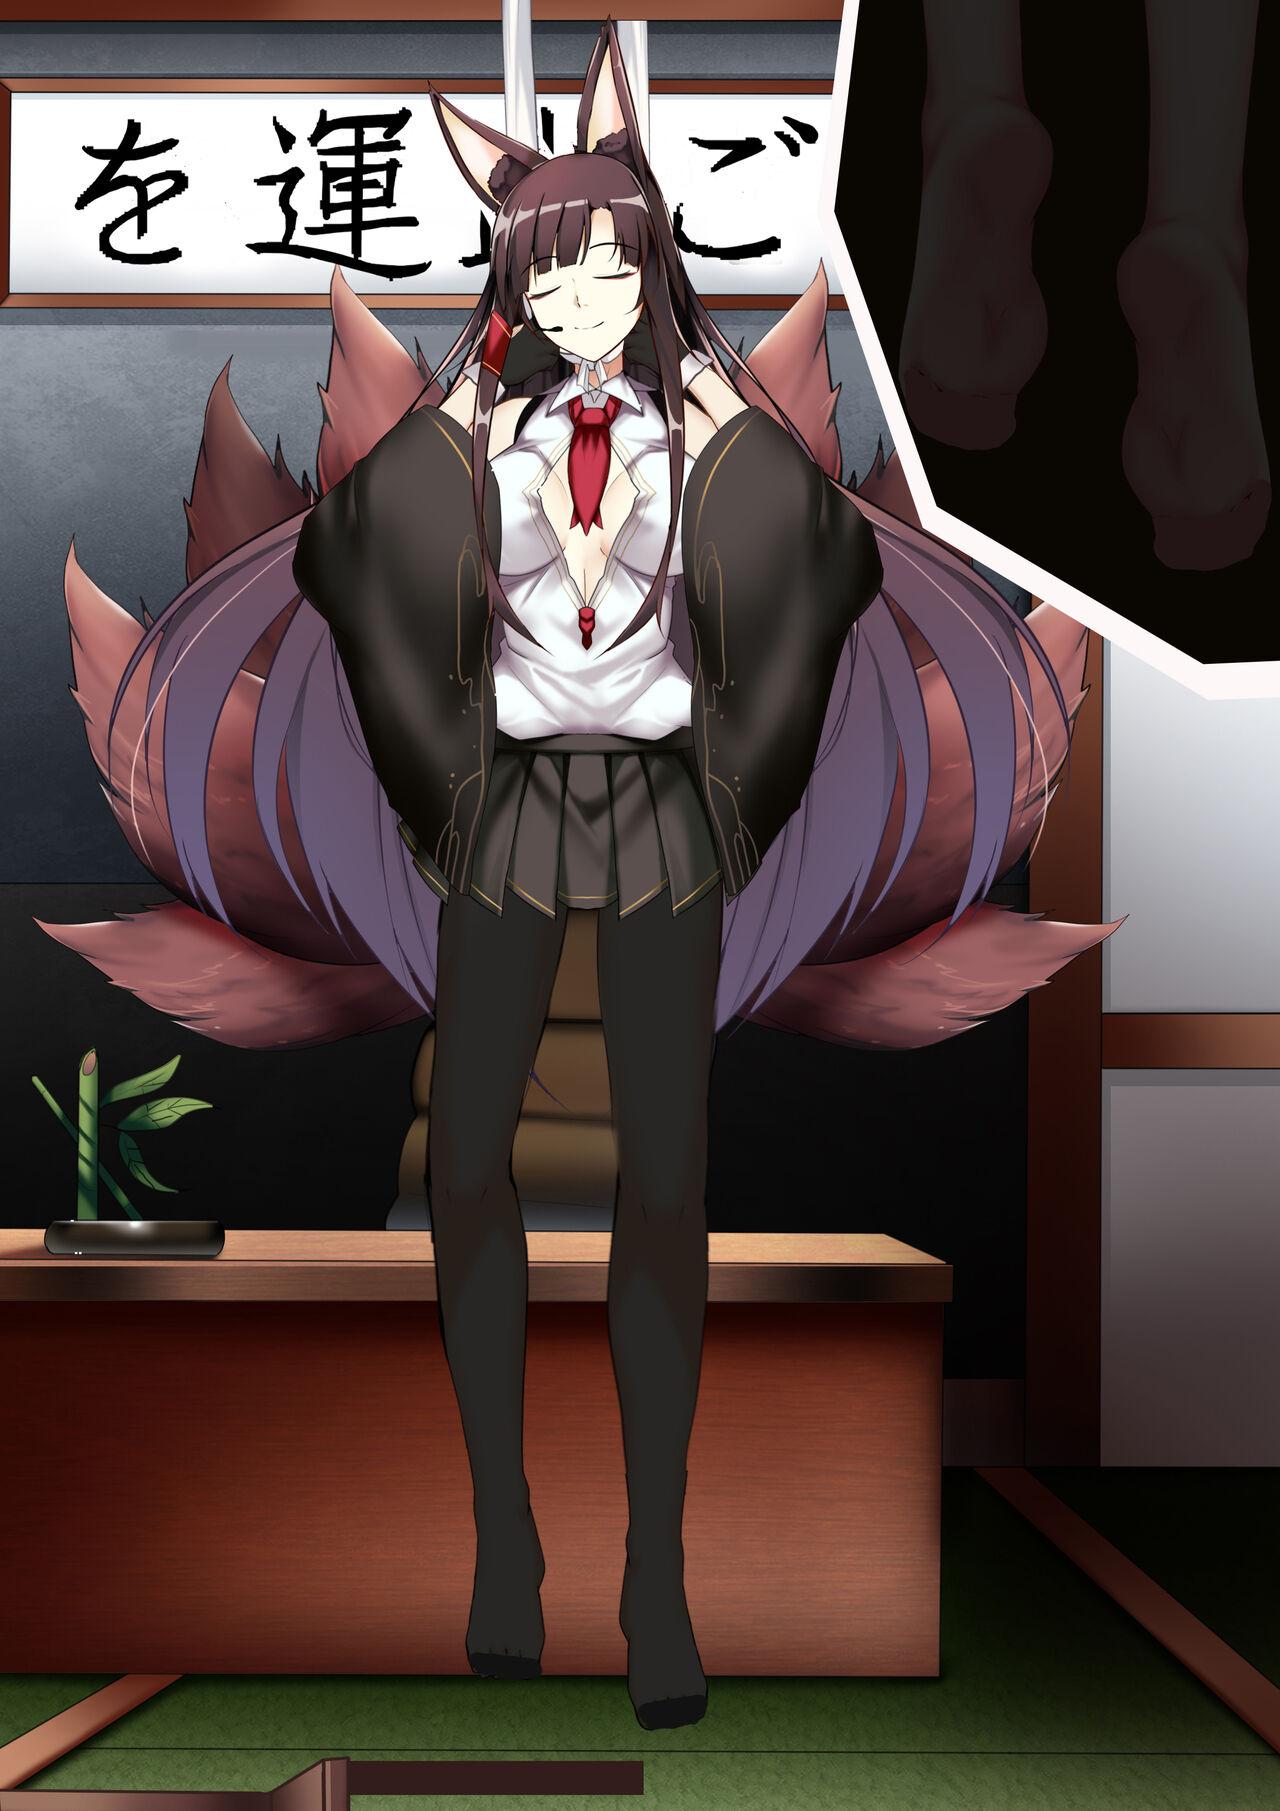 Akagi hanged herself in her office 30